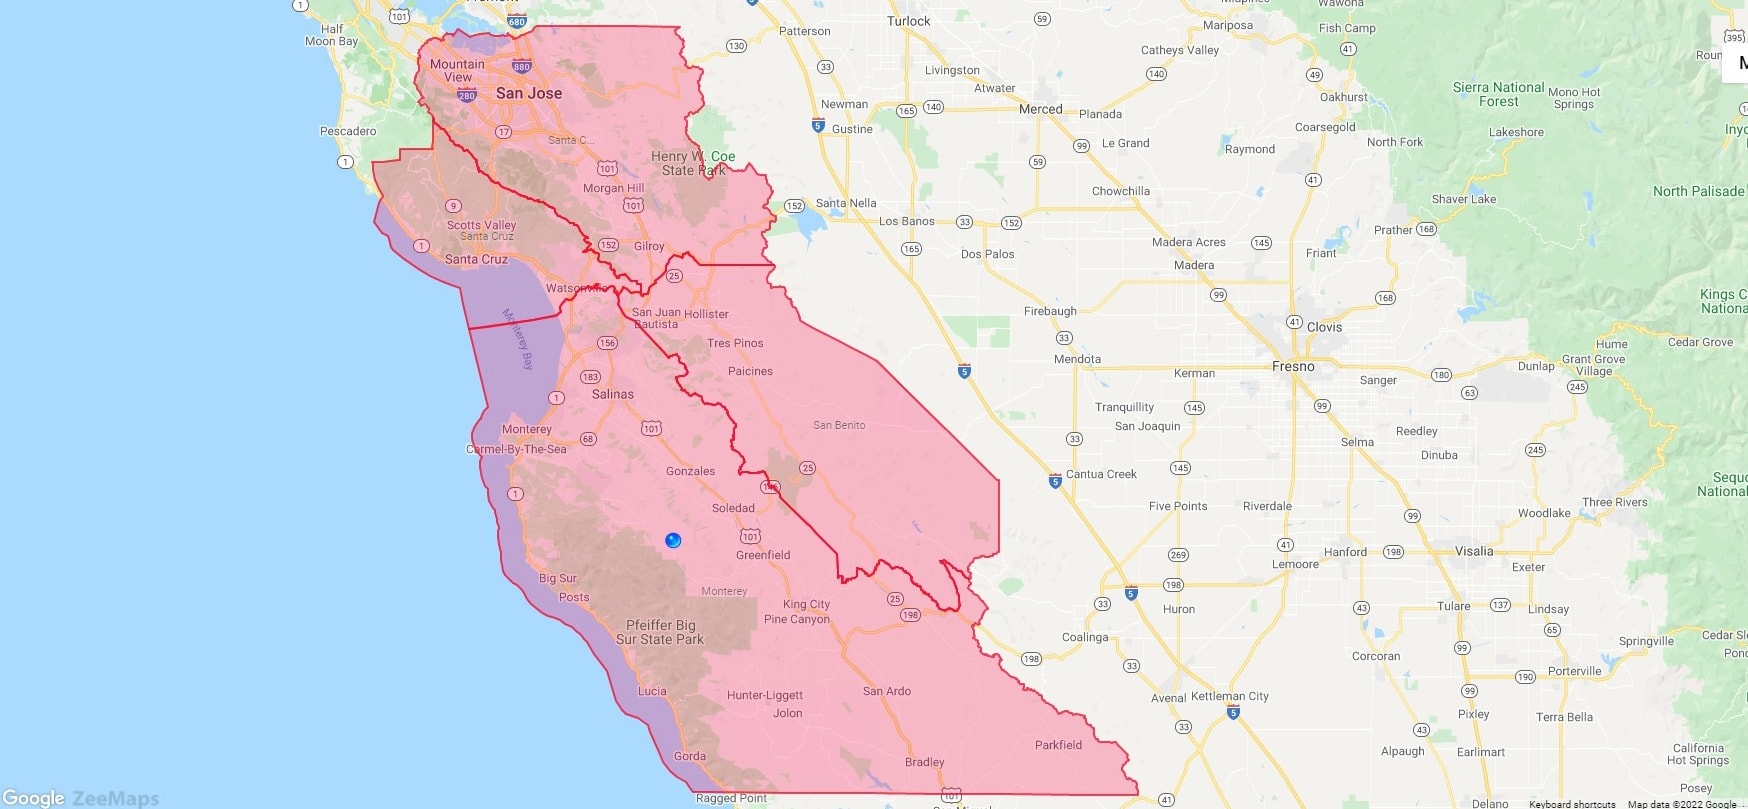 Map of Monterey, San Benito, Santa Cruz, and Santa Clara counties in California.